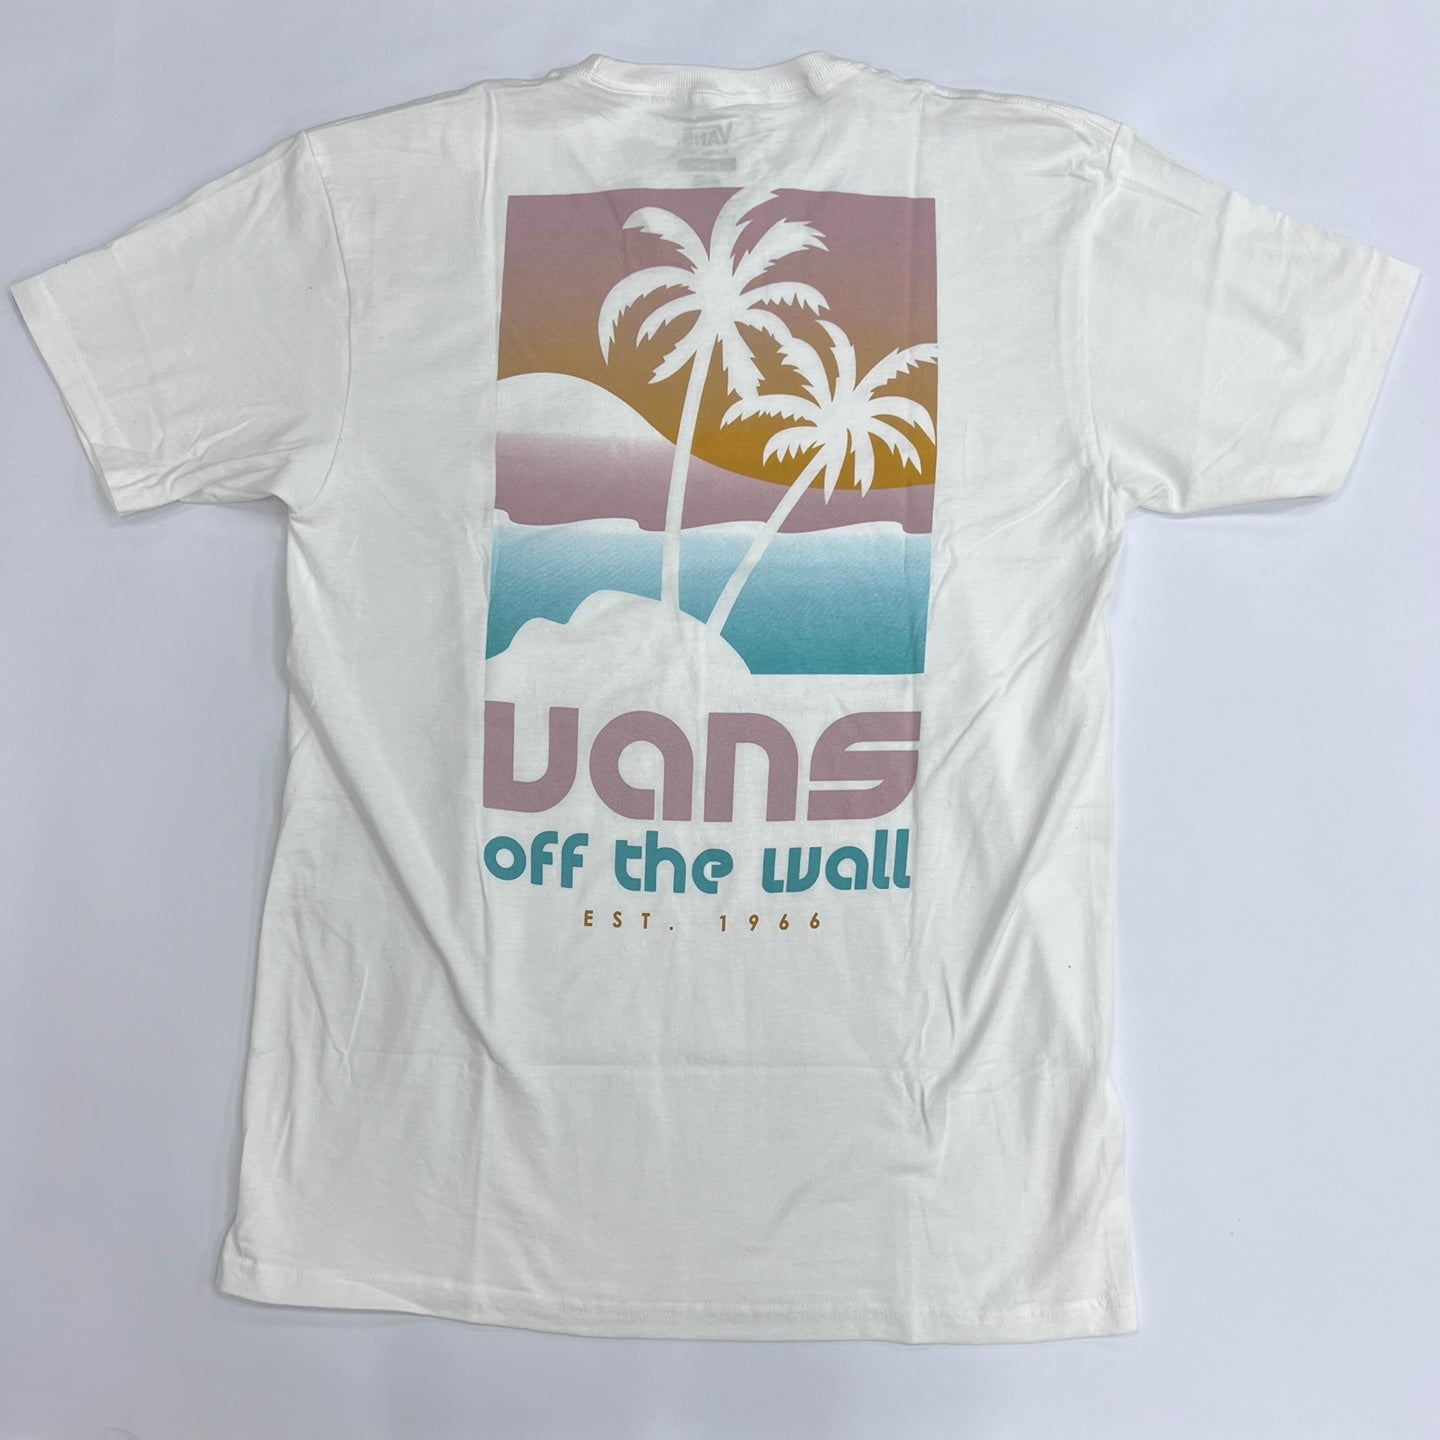 VANS Island Dual Palm T-Shirt